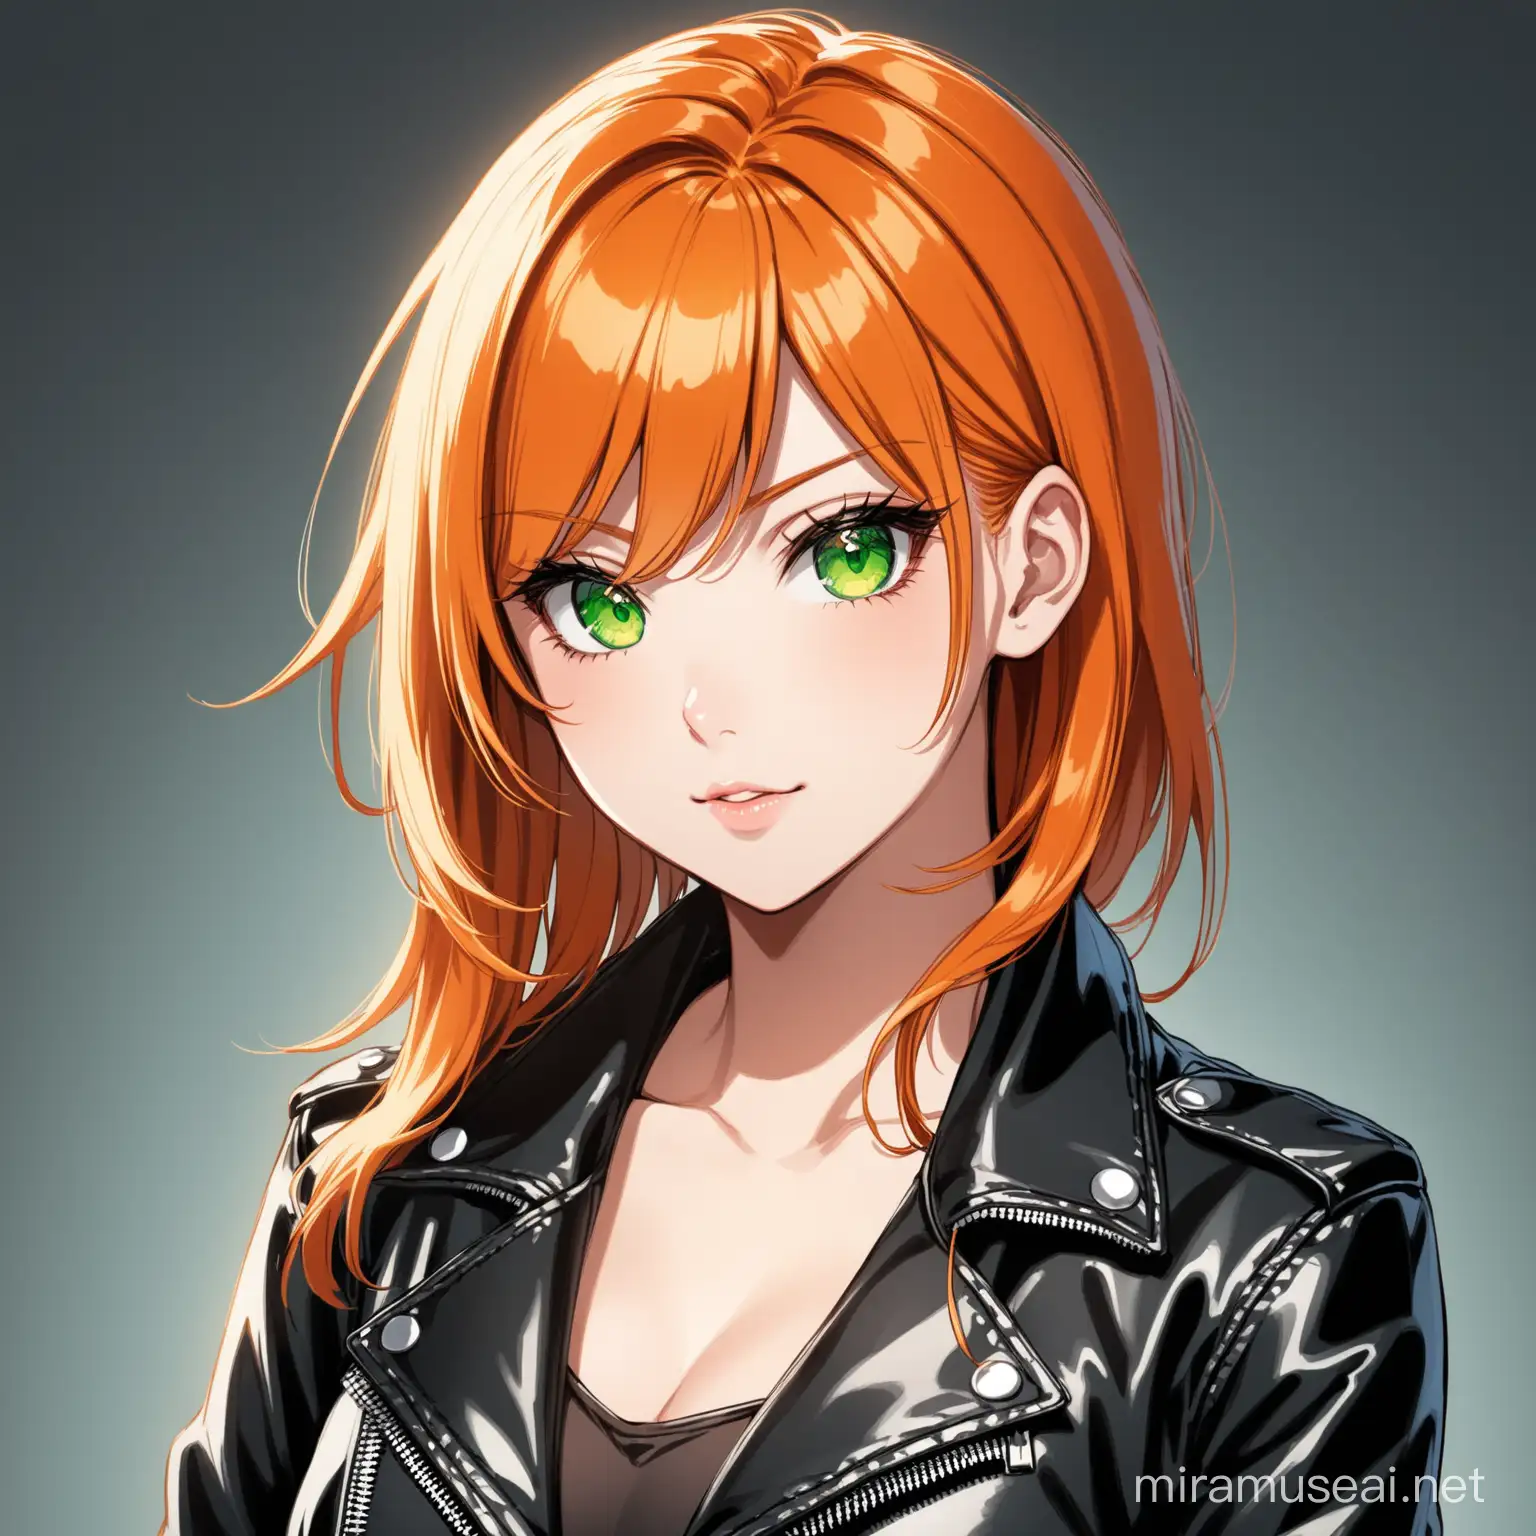 Stylish Female with Orange Hair and Green Eyes in Black Leather Jacket